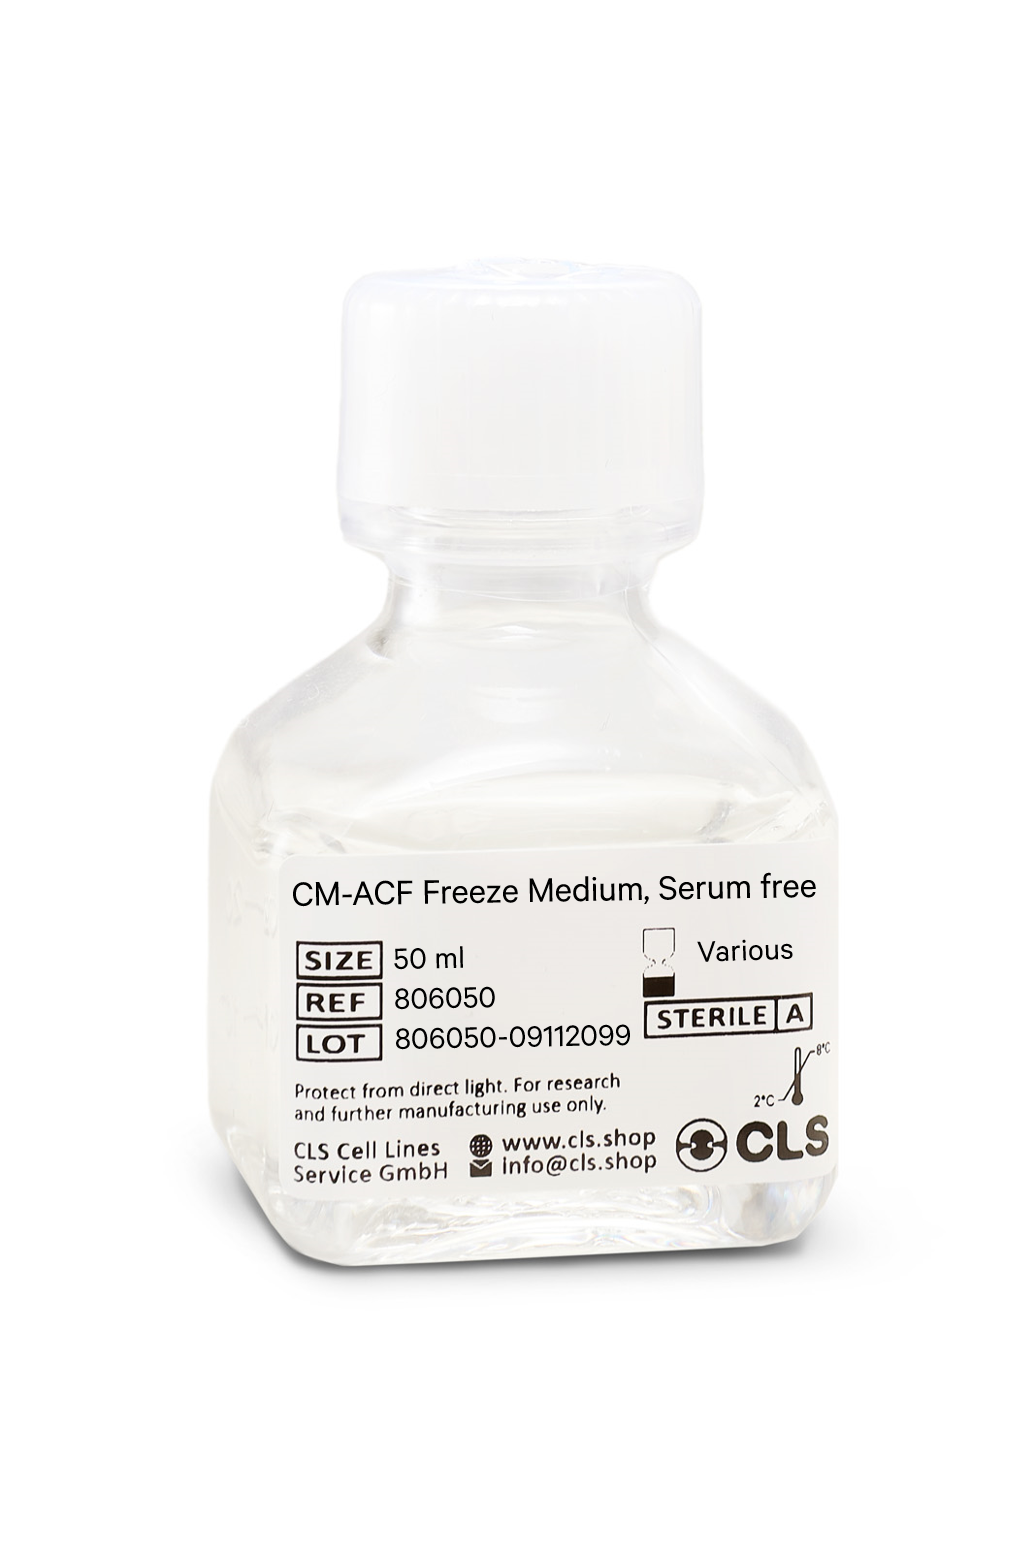 Freeze medium CM-ACF - serum free - 50 ml